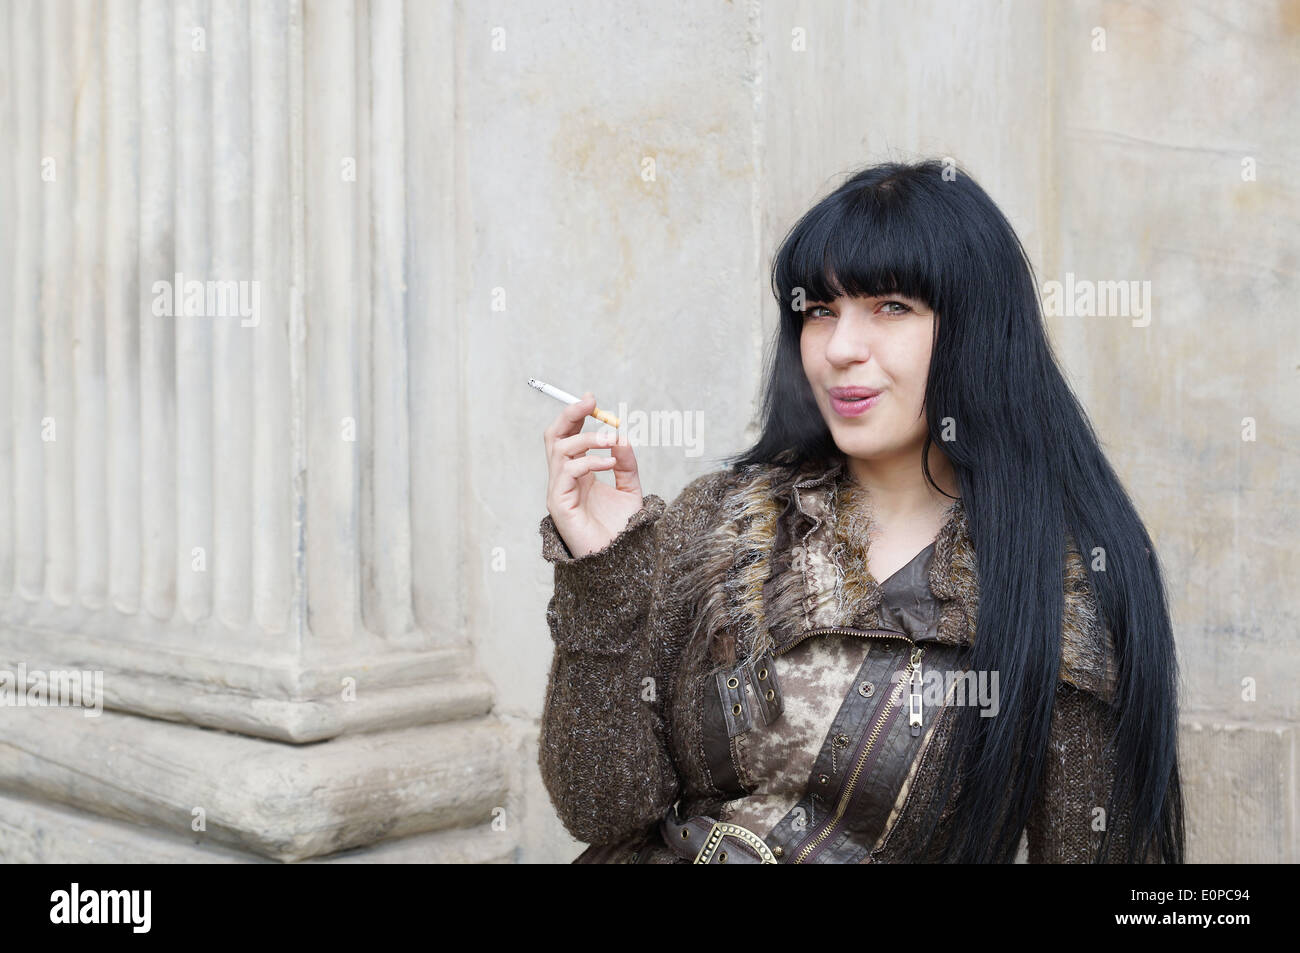 woman smoking cigarette Stock Photo